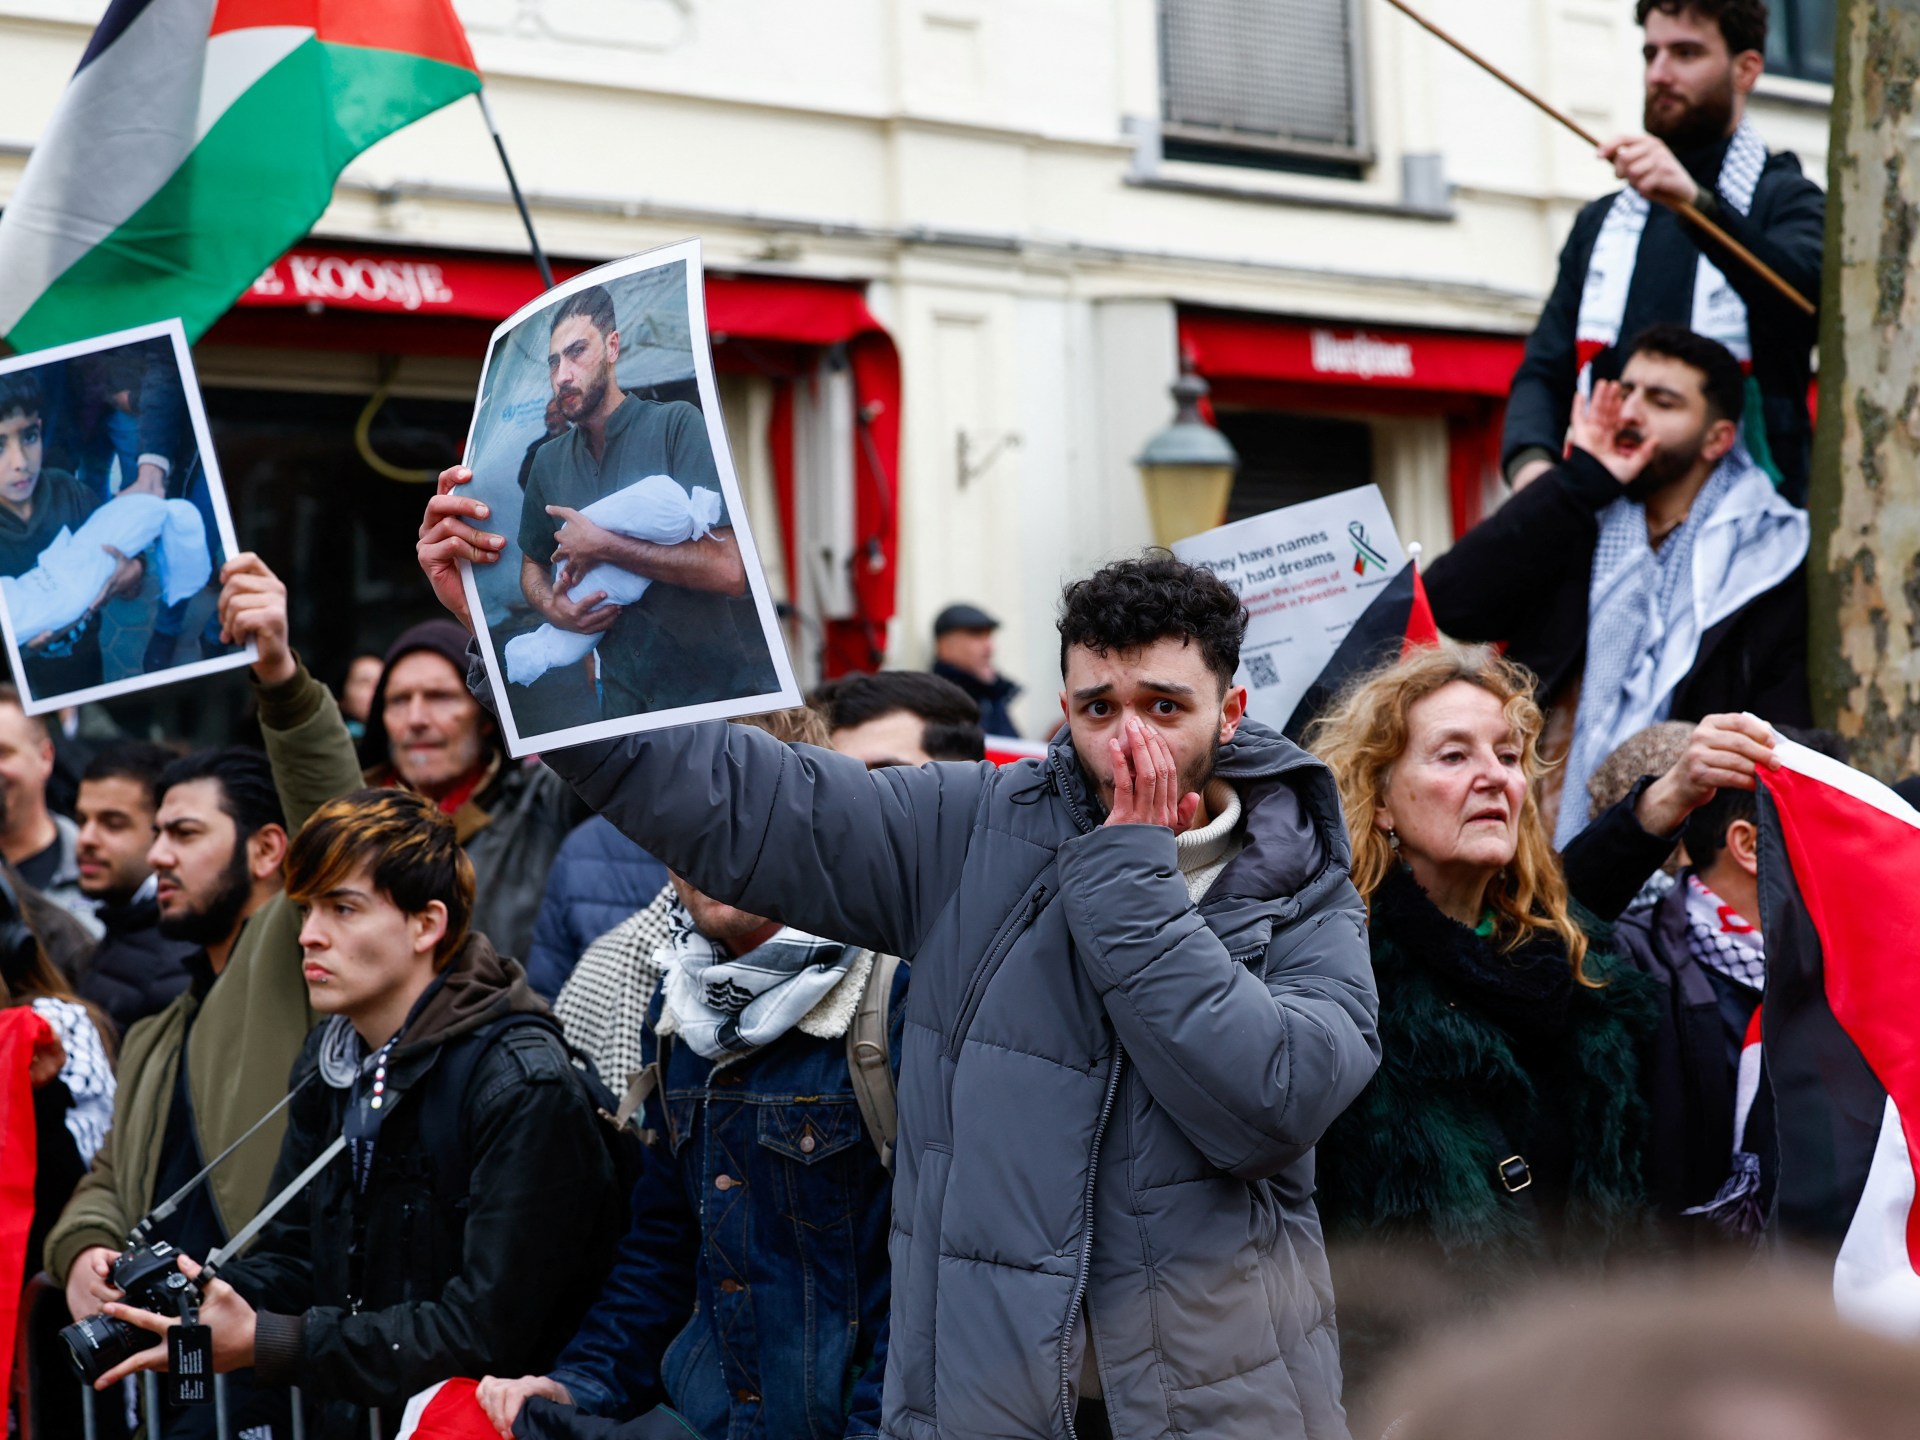 Proteste contro la presenza del leader israeliano Herzog al Museo olandese dell'Olocausto |  Notizie della guerra israeliana a Gaza